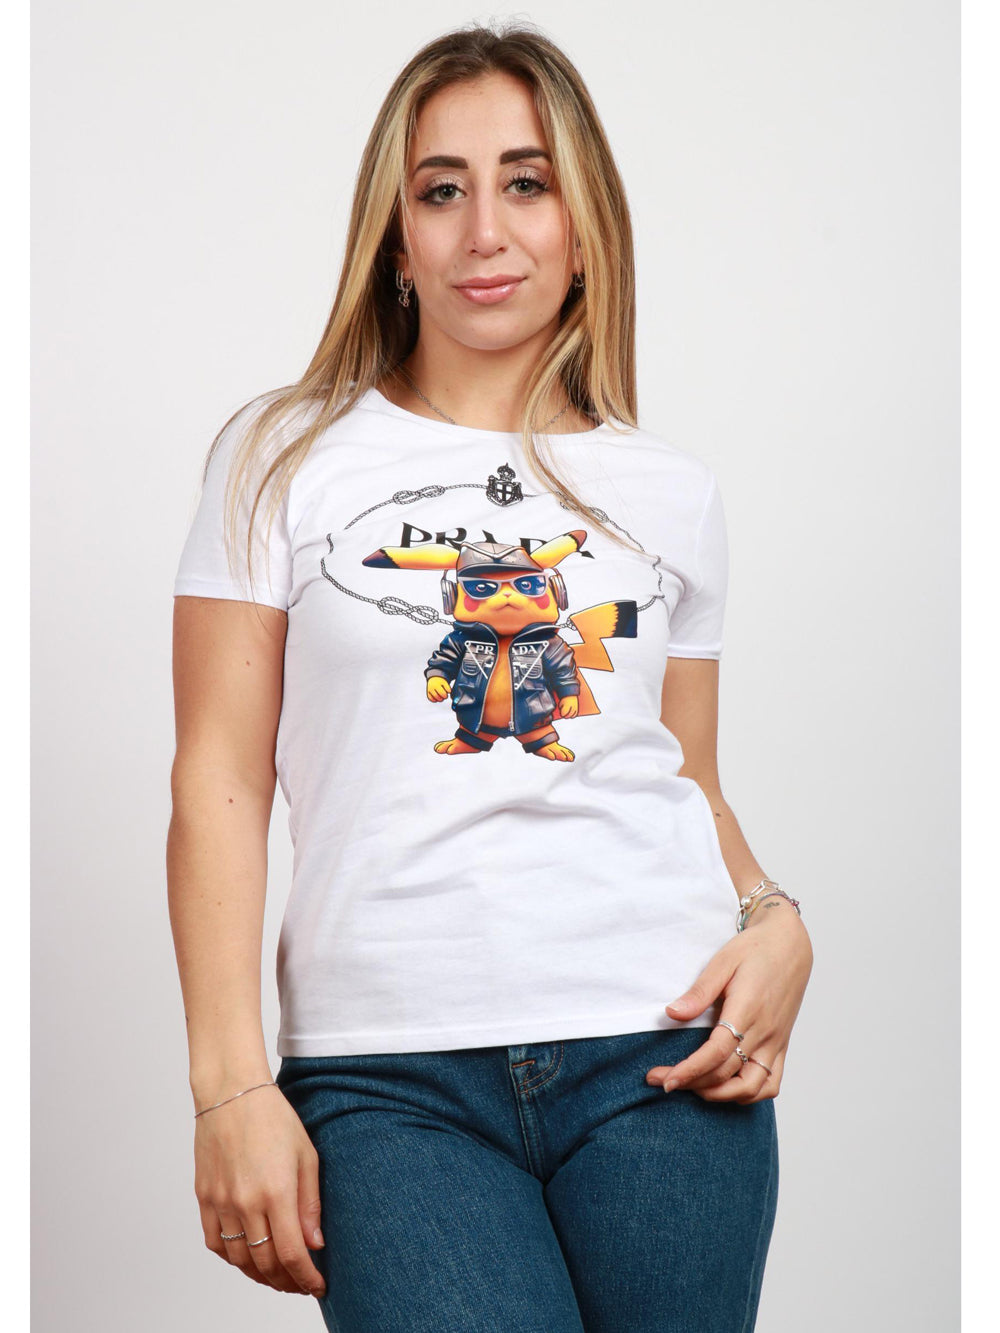 DBSOUL T-Shirt Rimini Bianca con Stampa Pikachu e Prada Bianco